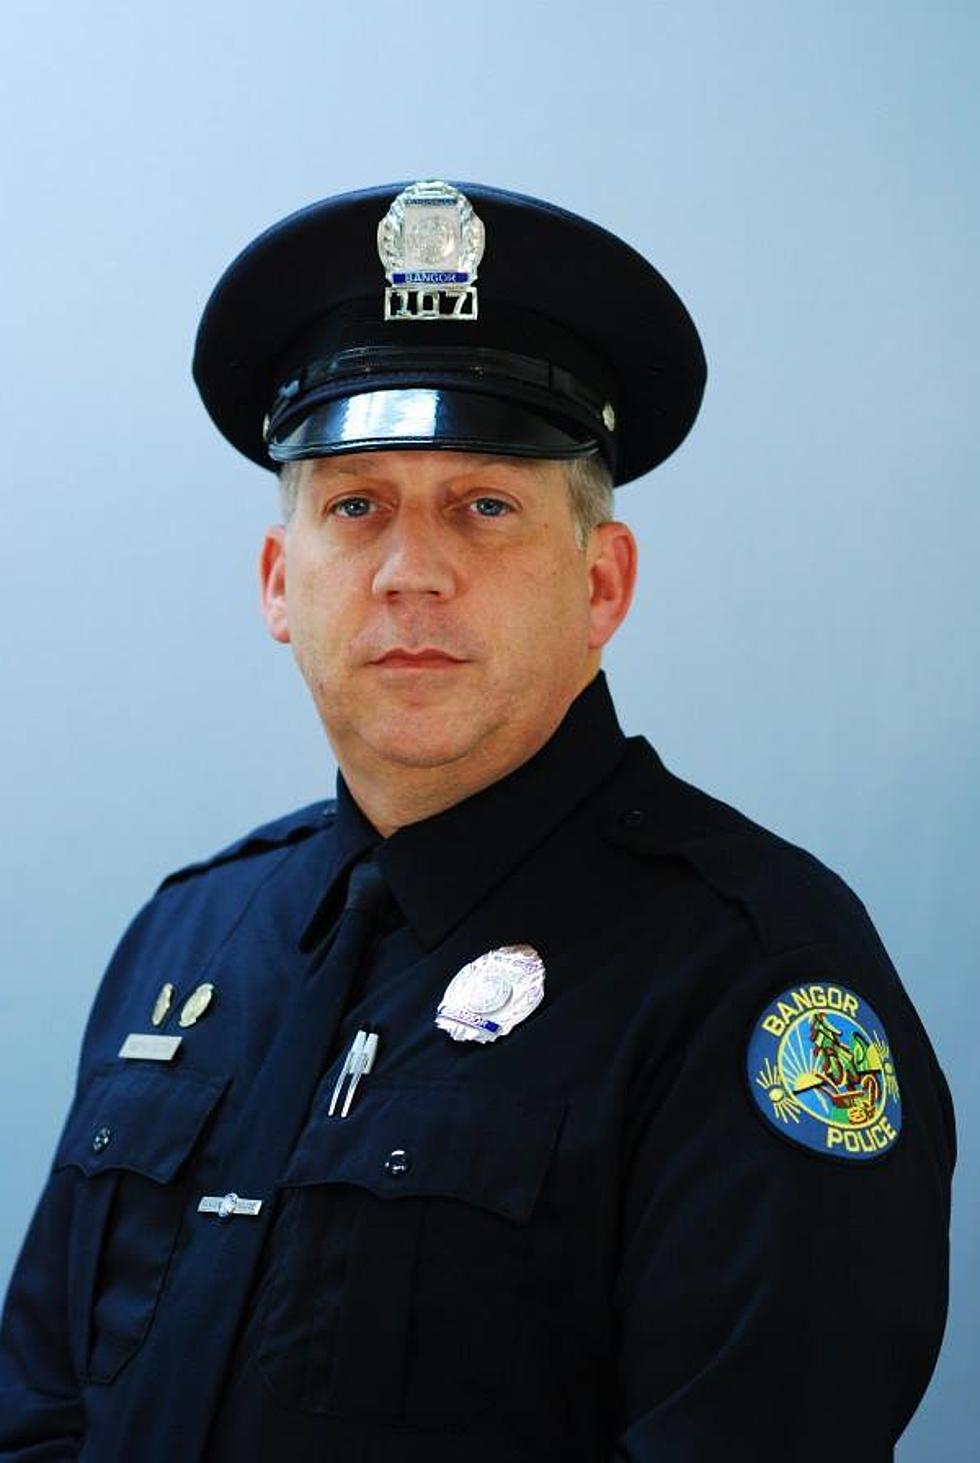 Meet The Man Behind Bangor Police Department’s Facebook Page